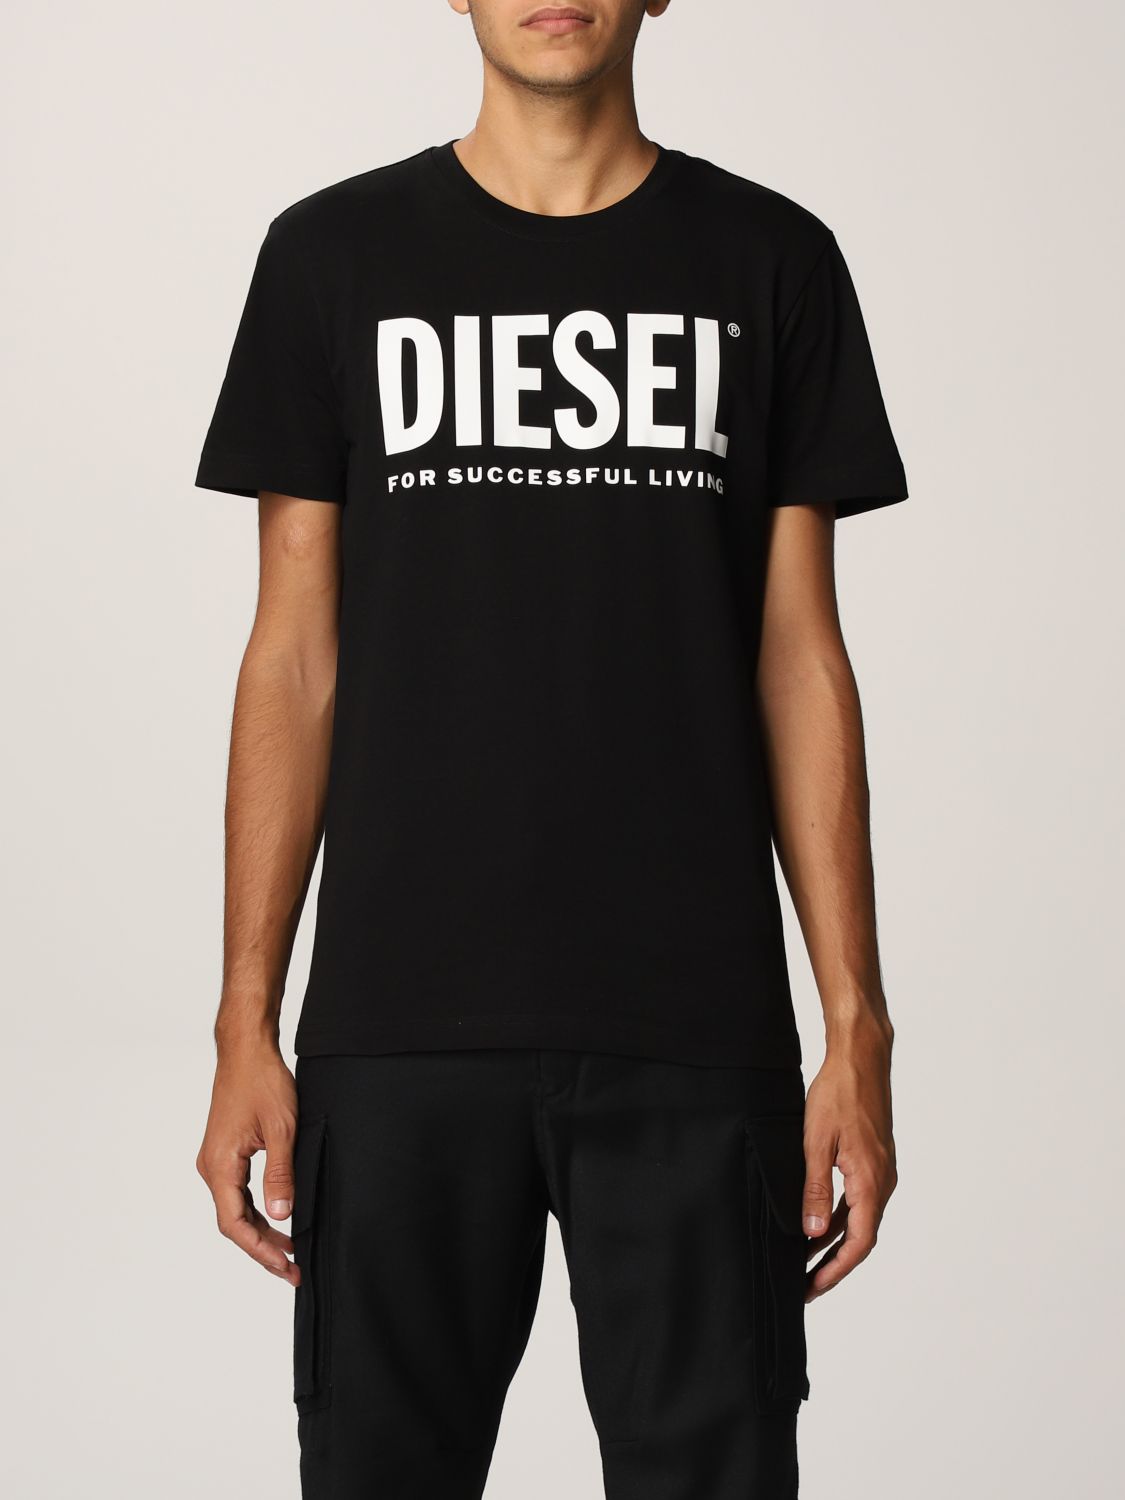 DIESEL: T-shirt men | T-Shirt Diesel Men Black | T-Shirt Diesel A02877 ...